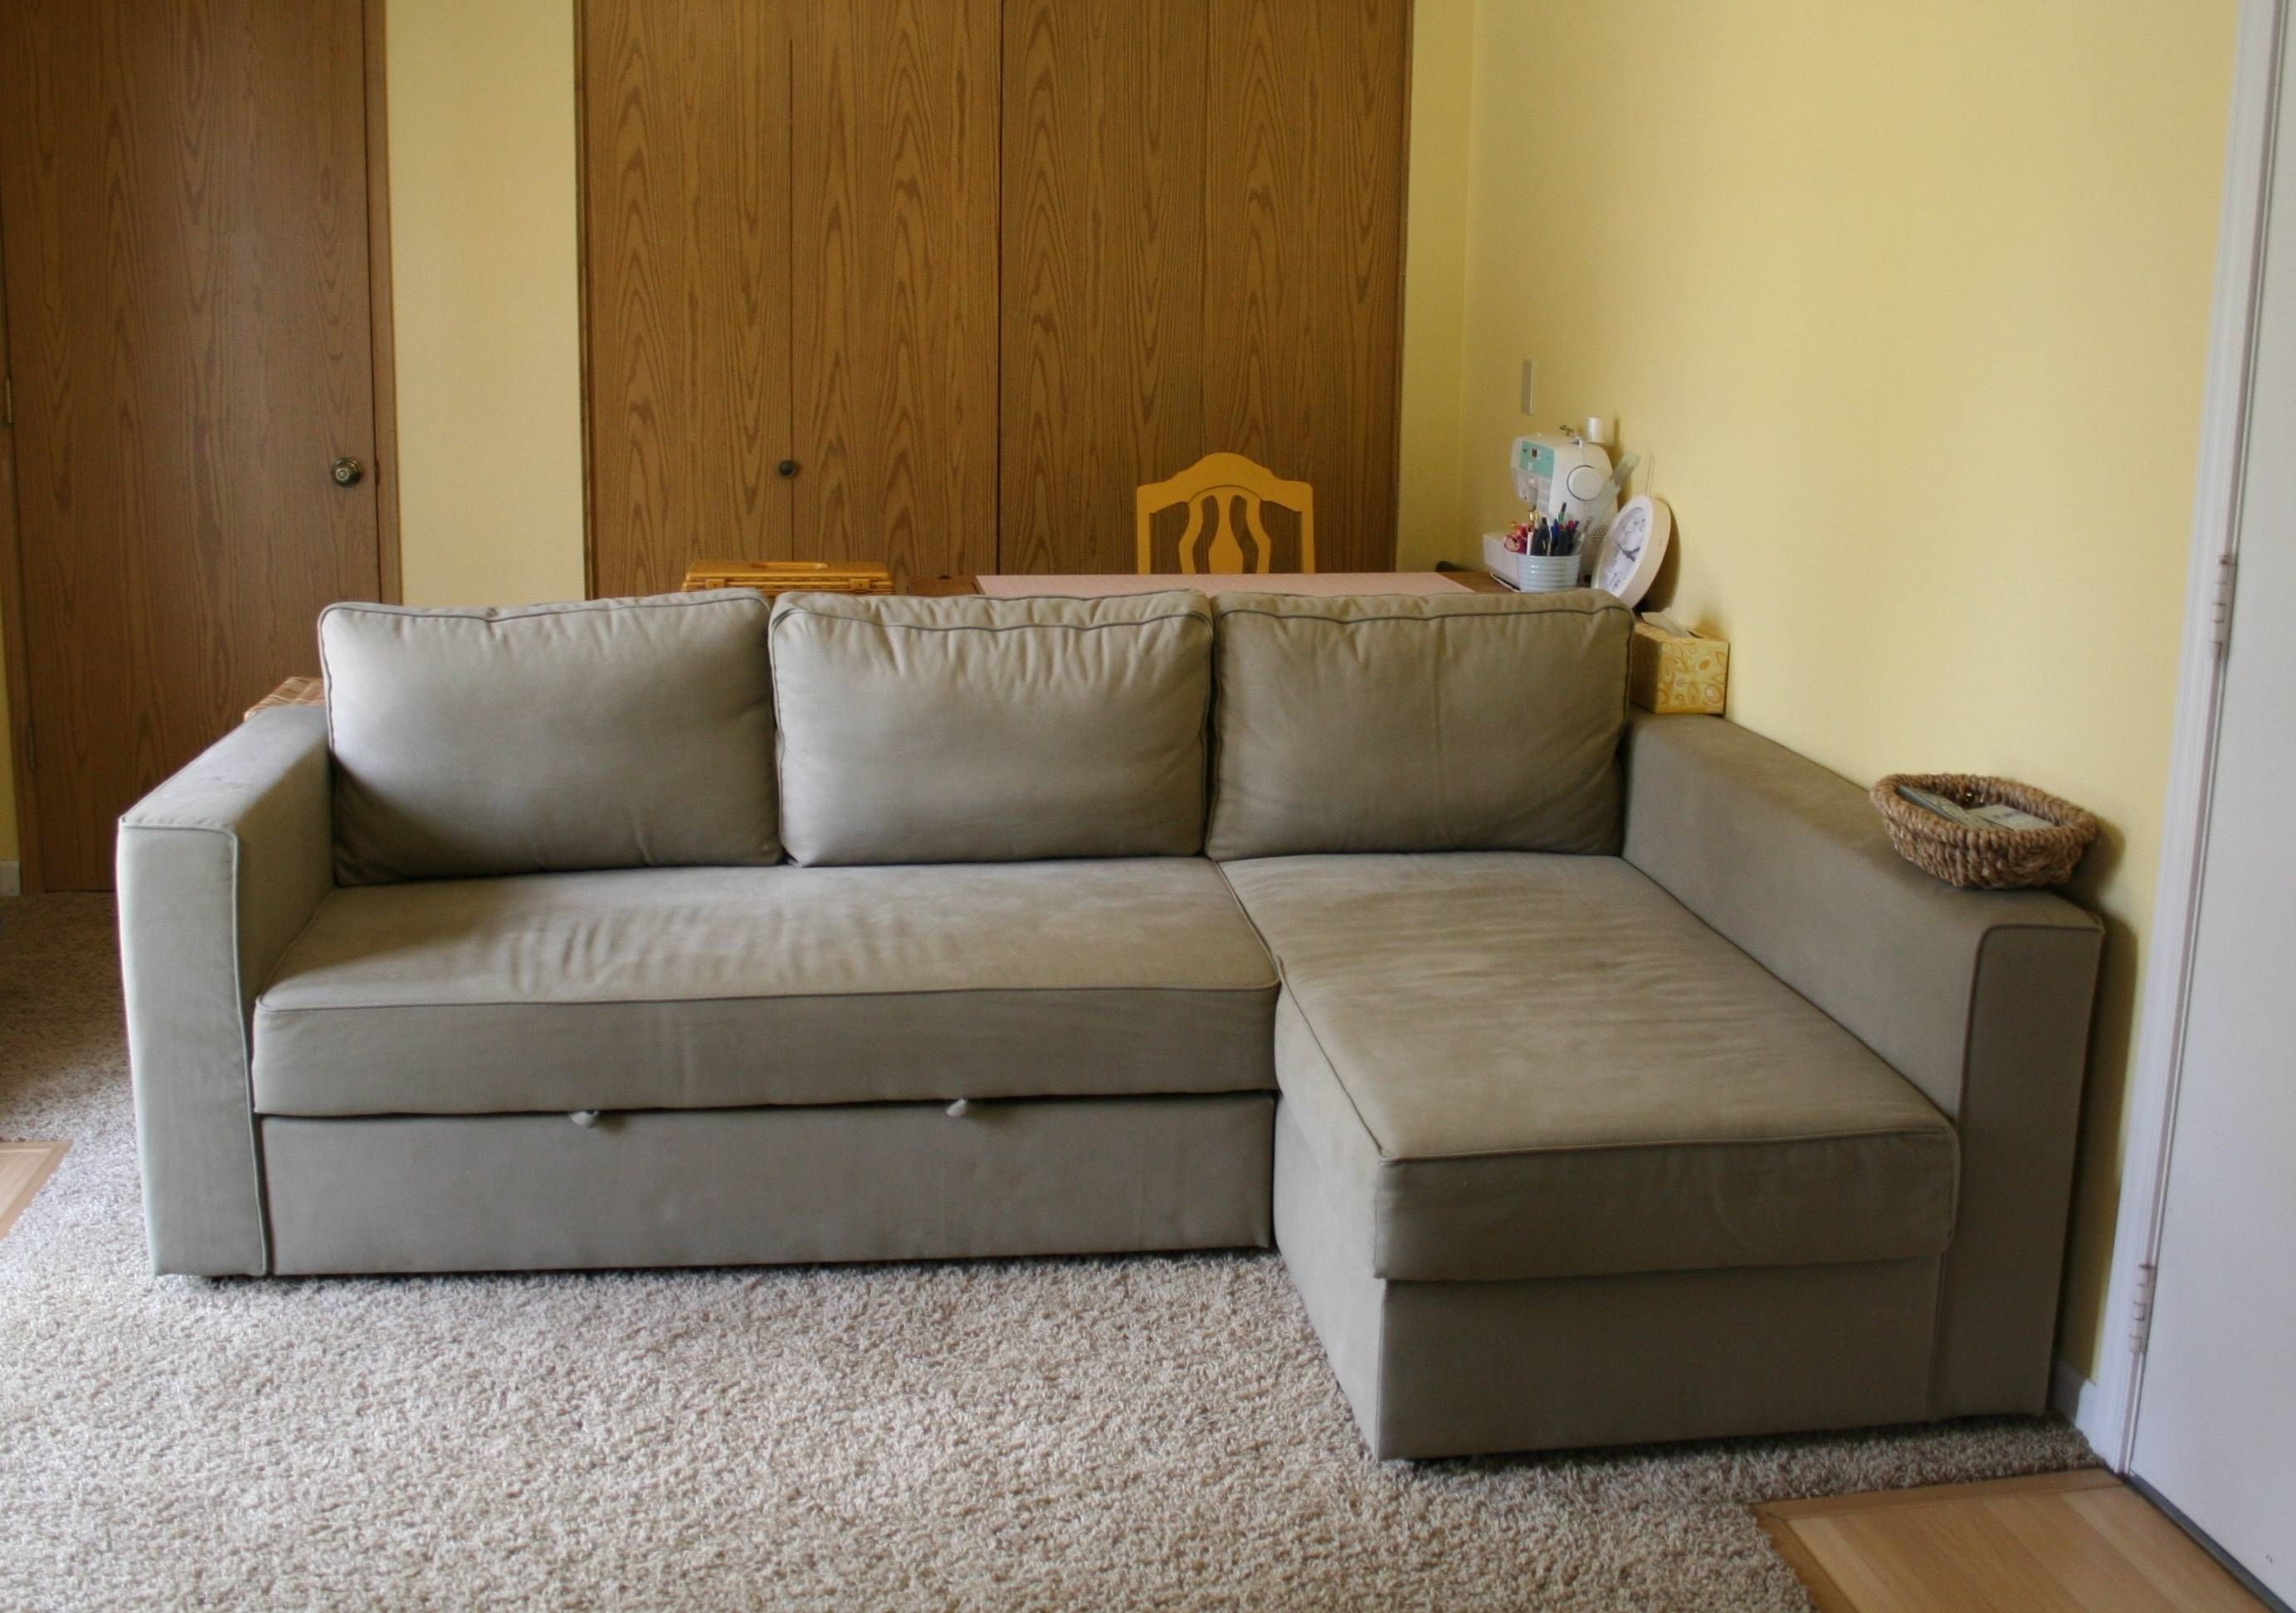 cheap corner sofa bed ikea